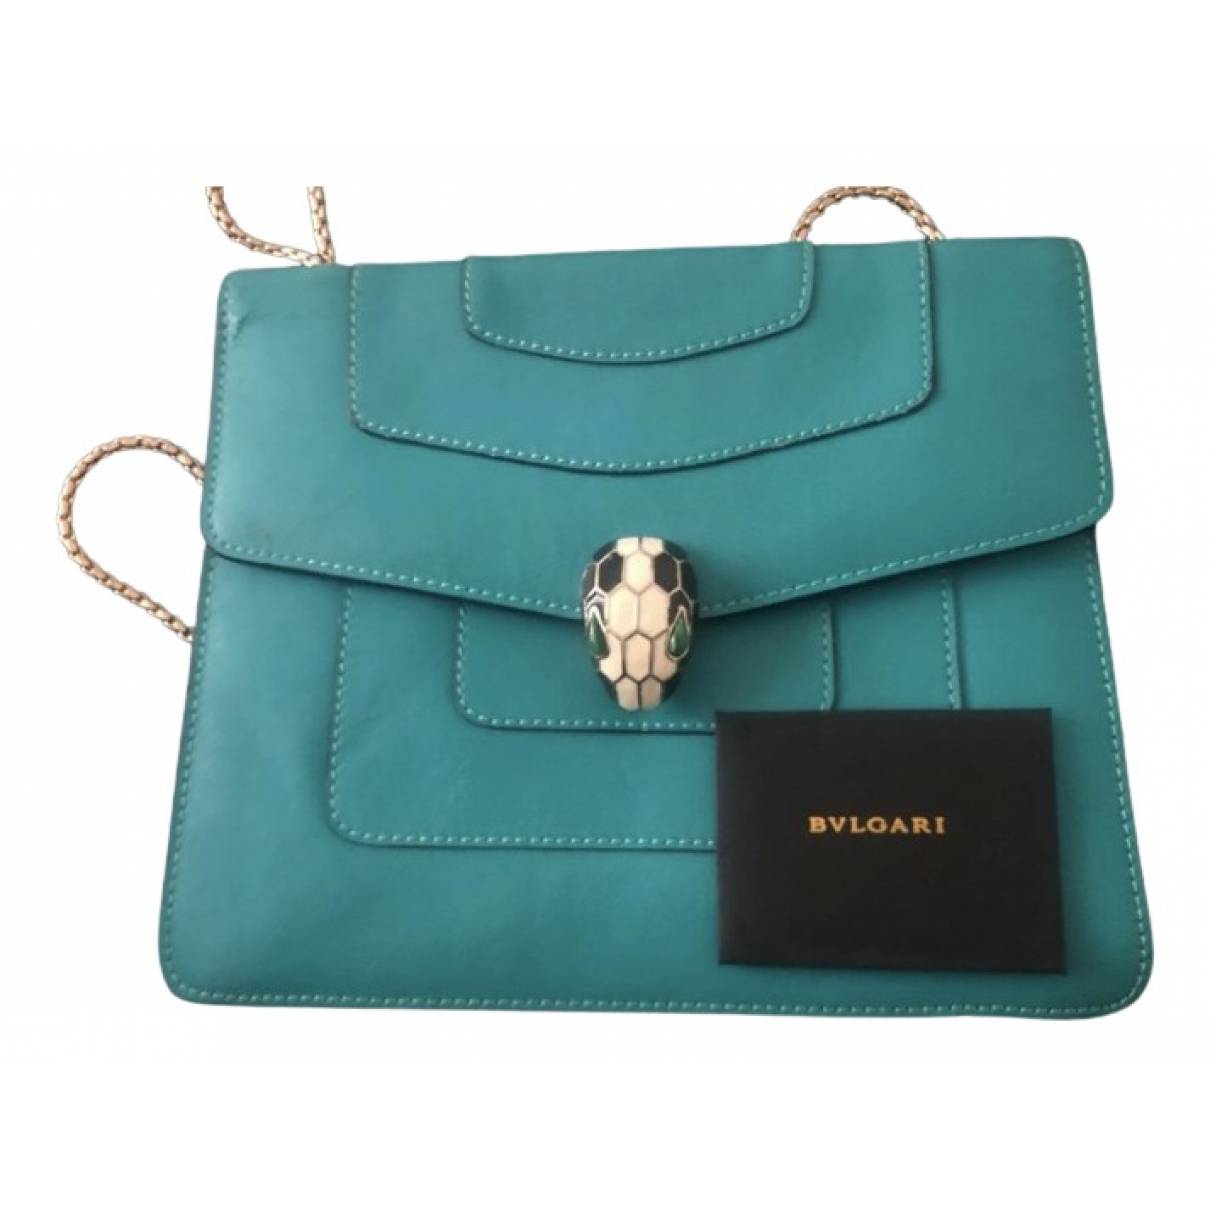 Serpenti leather handbag Bvlgari Turquoise in Leather - 22565580